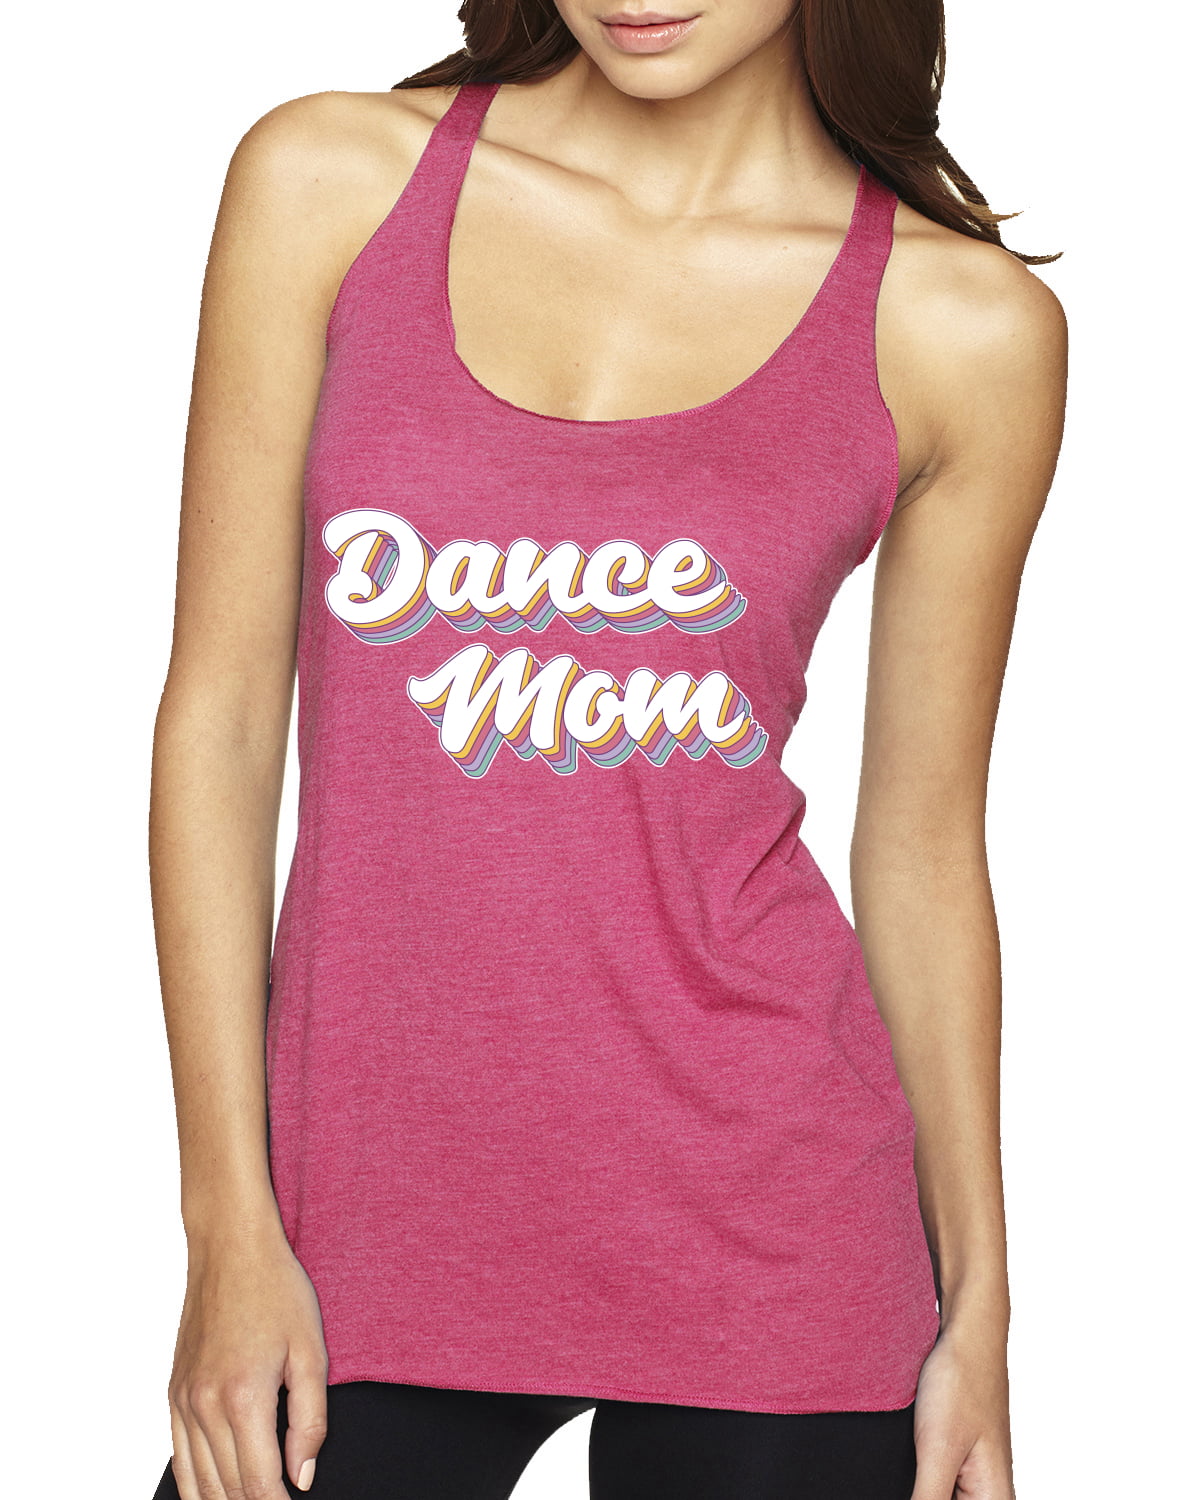 Wild Bobby Dance Mom Girl Sports Women Tri-Blend Racerback Tank Top,  Vintage Turquoise, Medium